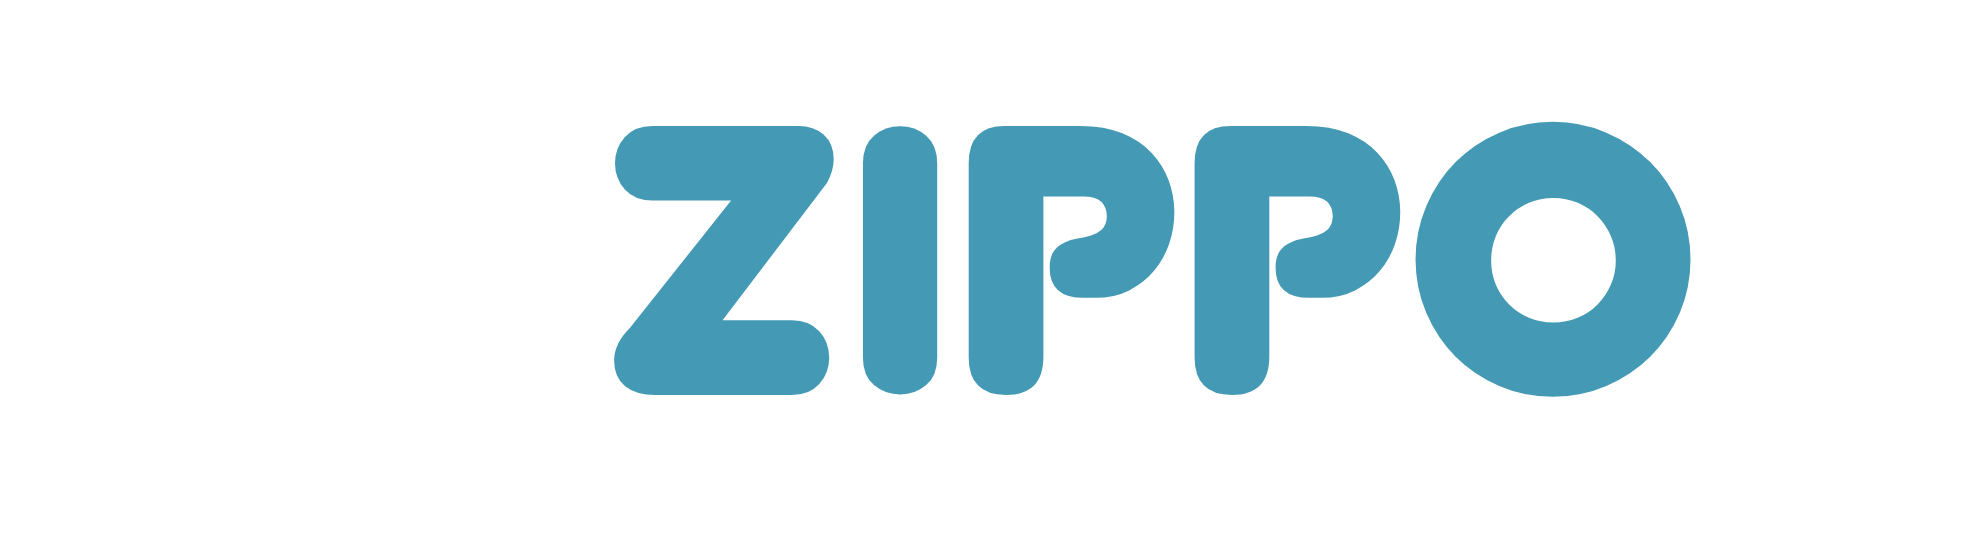 PC zippo 